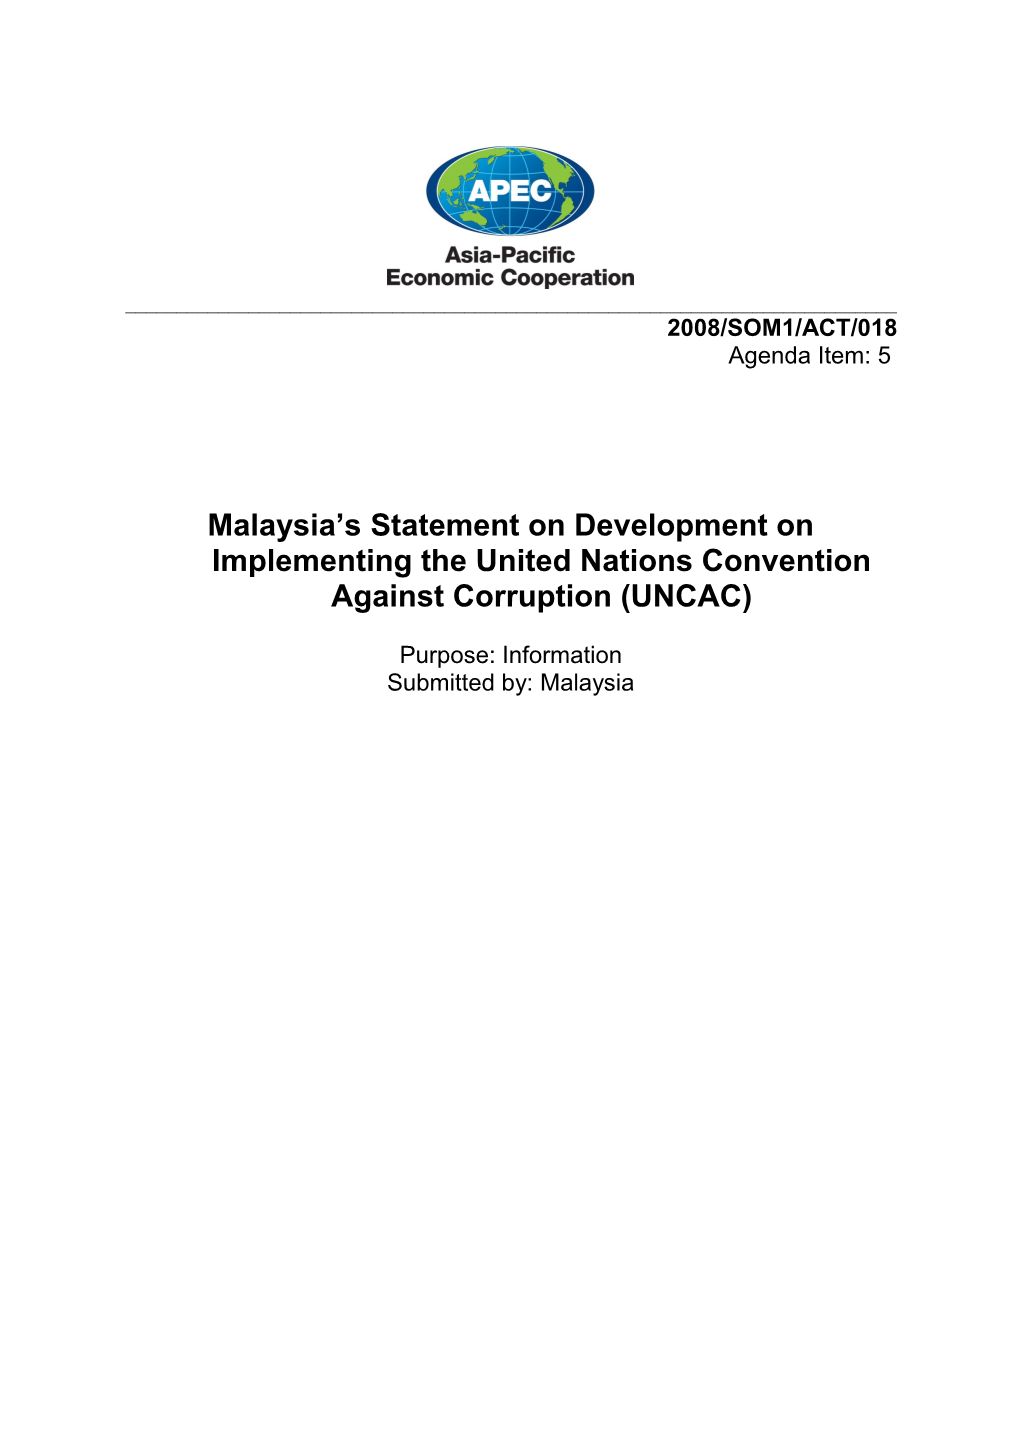 Malaysia Statements on UNCAC